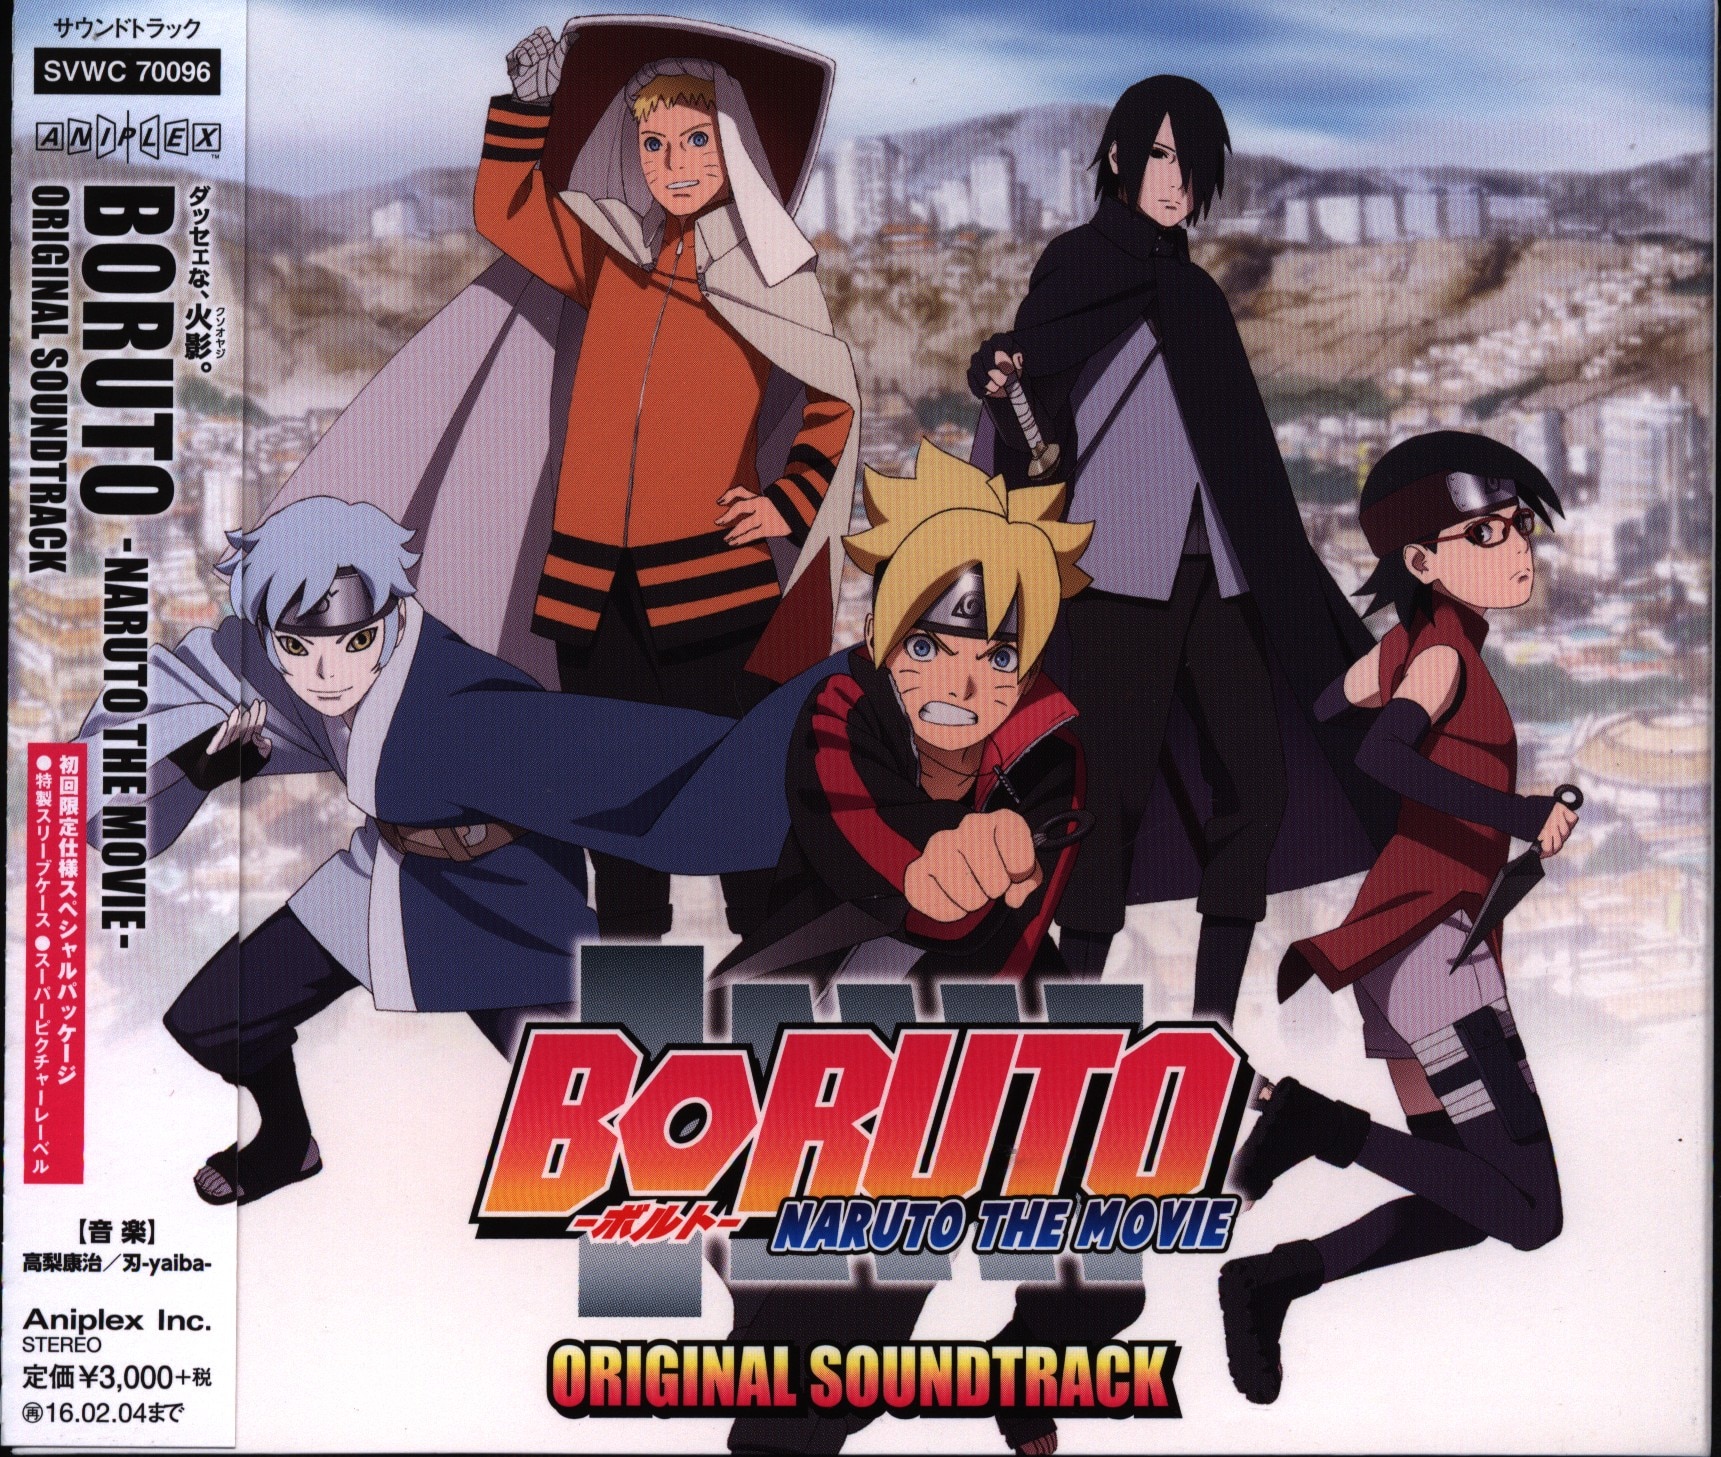 BORUTO - NARUTO THE MOVIE - Original Soundtrack